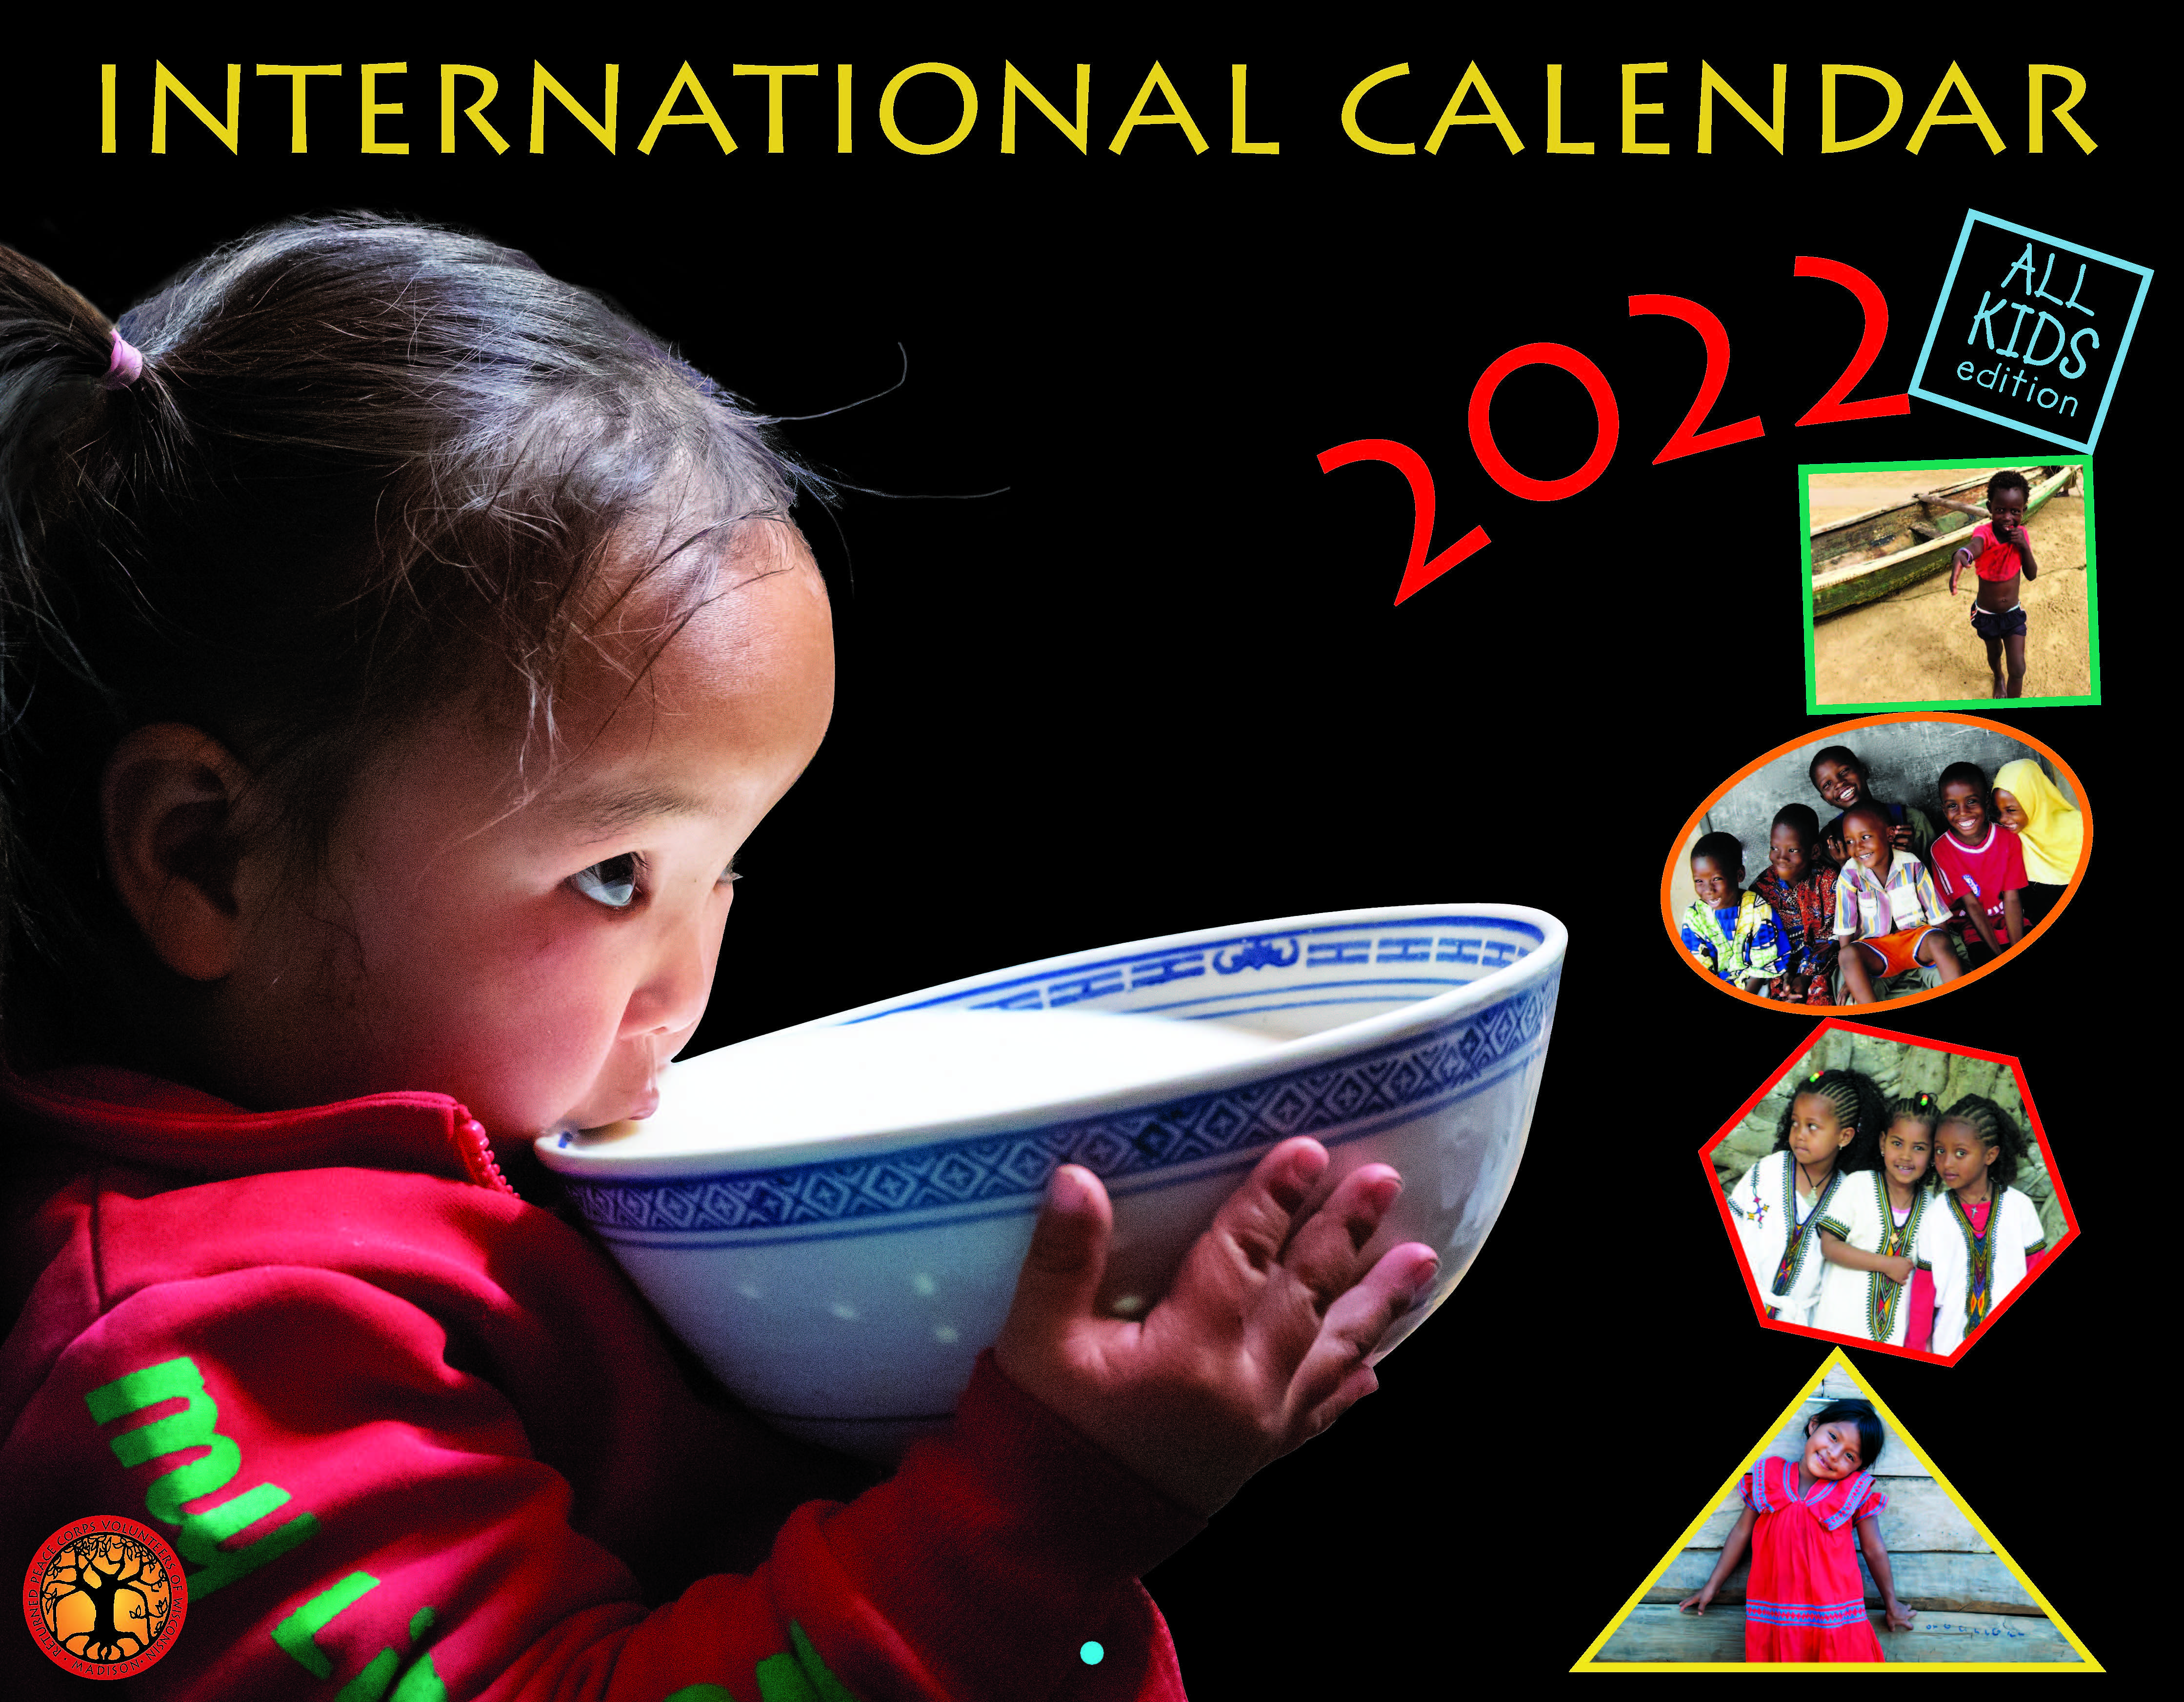 2022 calendar cover photo